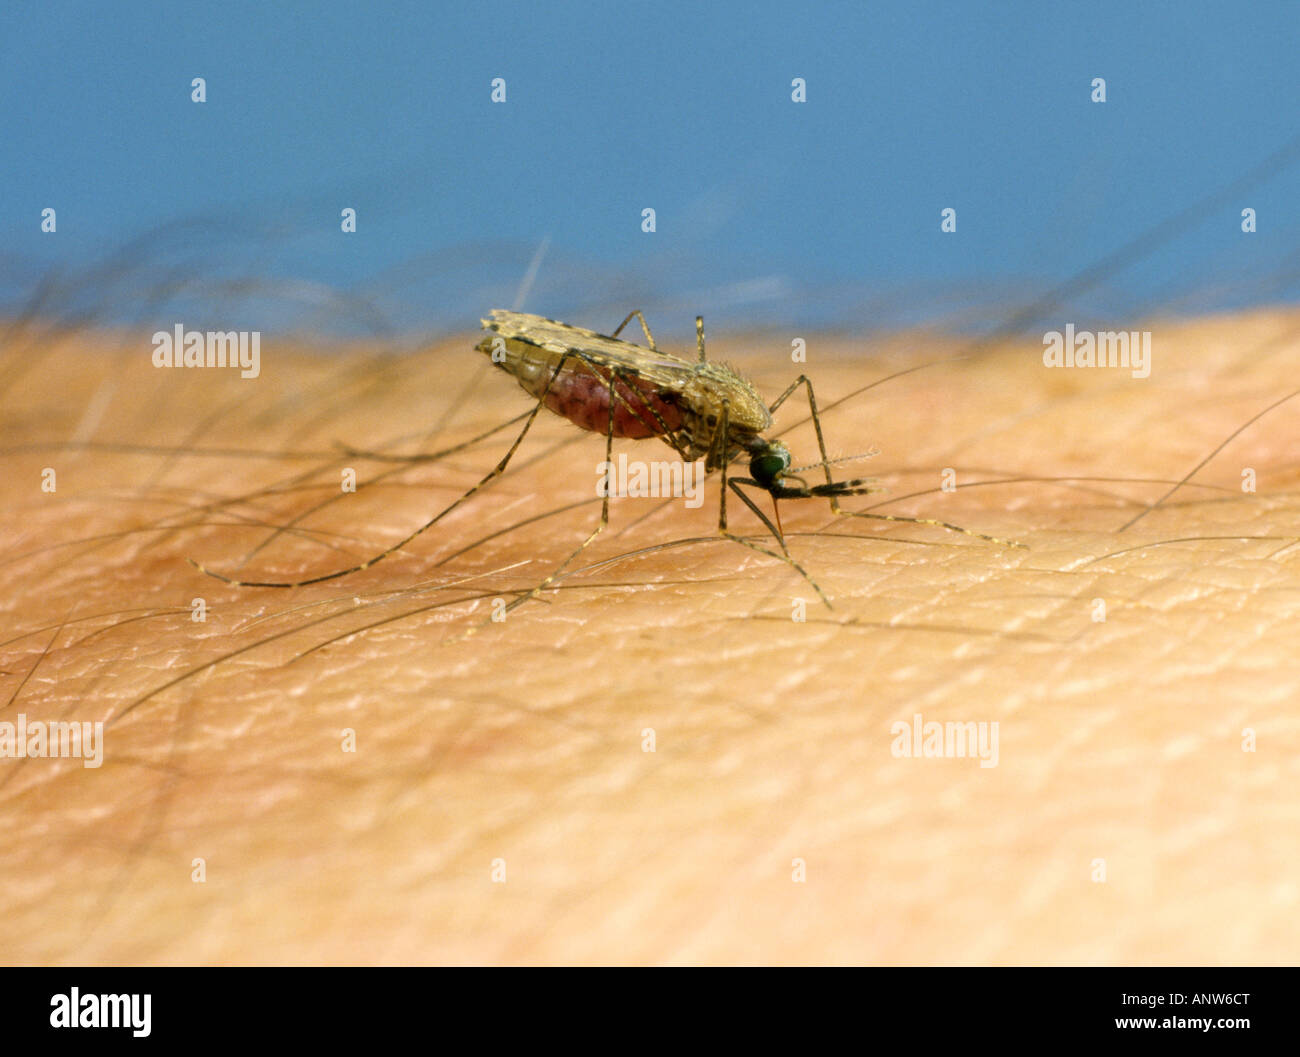 African malaria vector mosquito Anopheles gambiae feeding on human hand Stock Photo